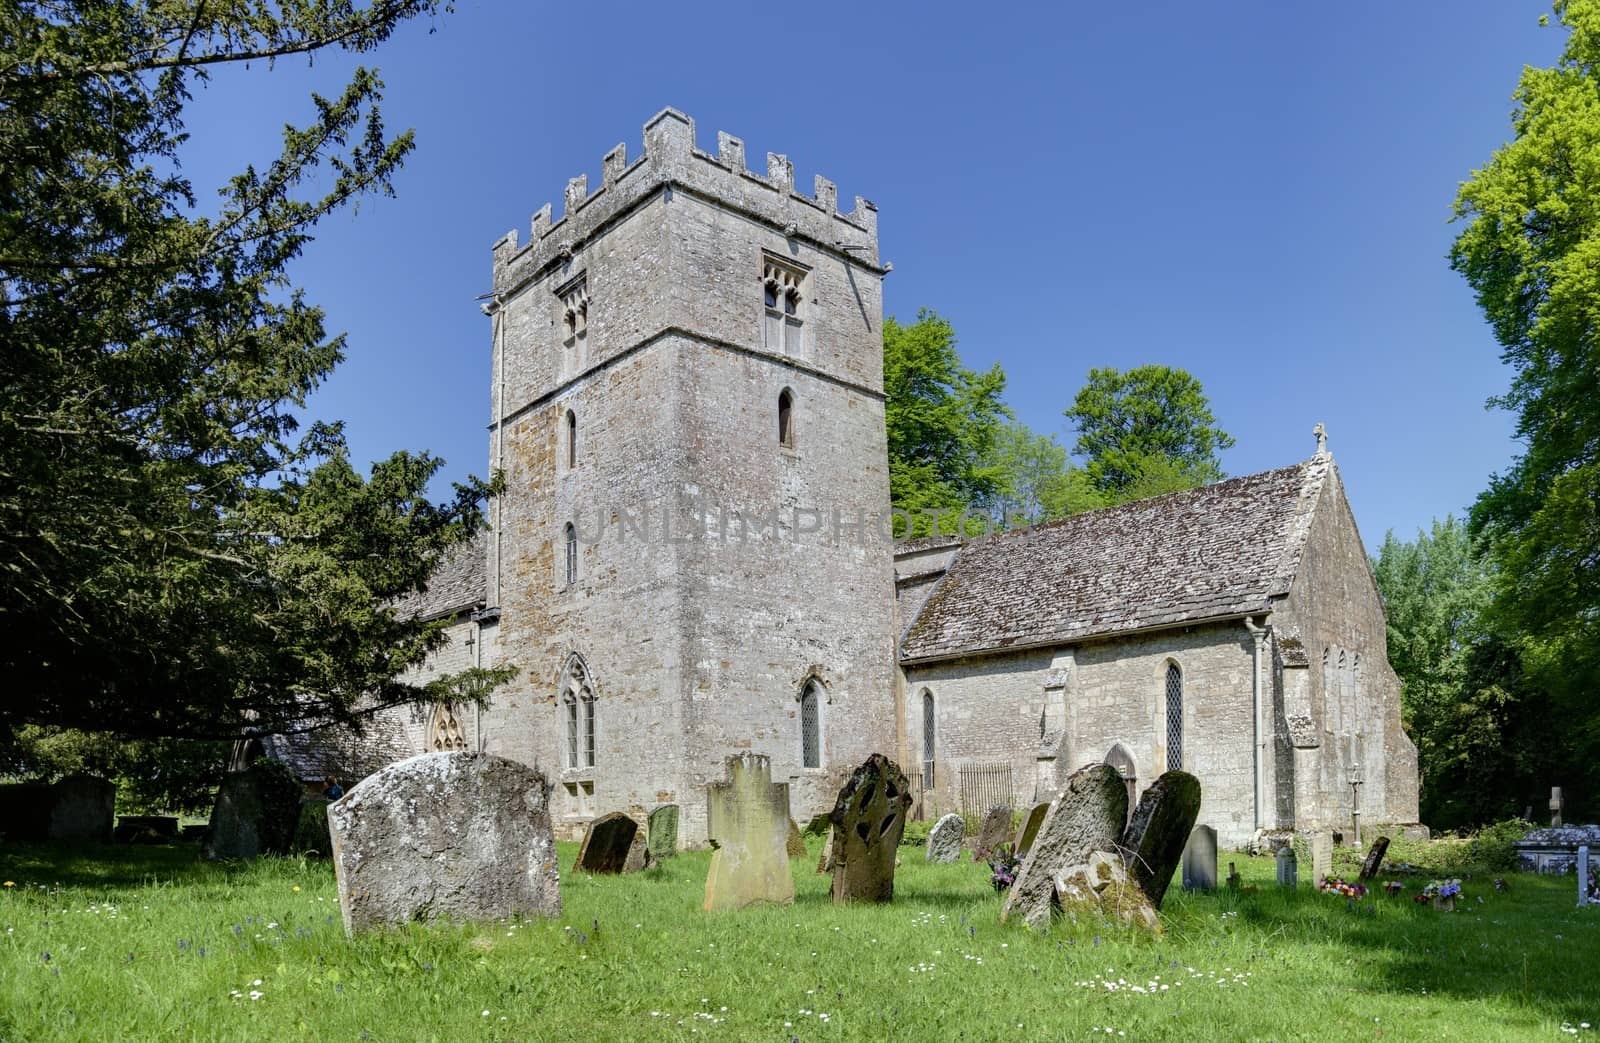 11th Century Cotswold church at Oddington, Gloucestershire, England.